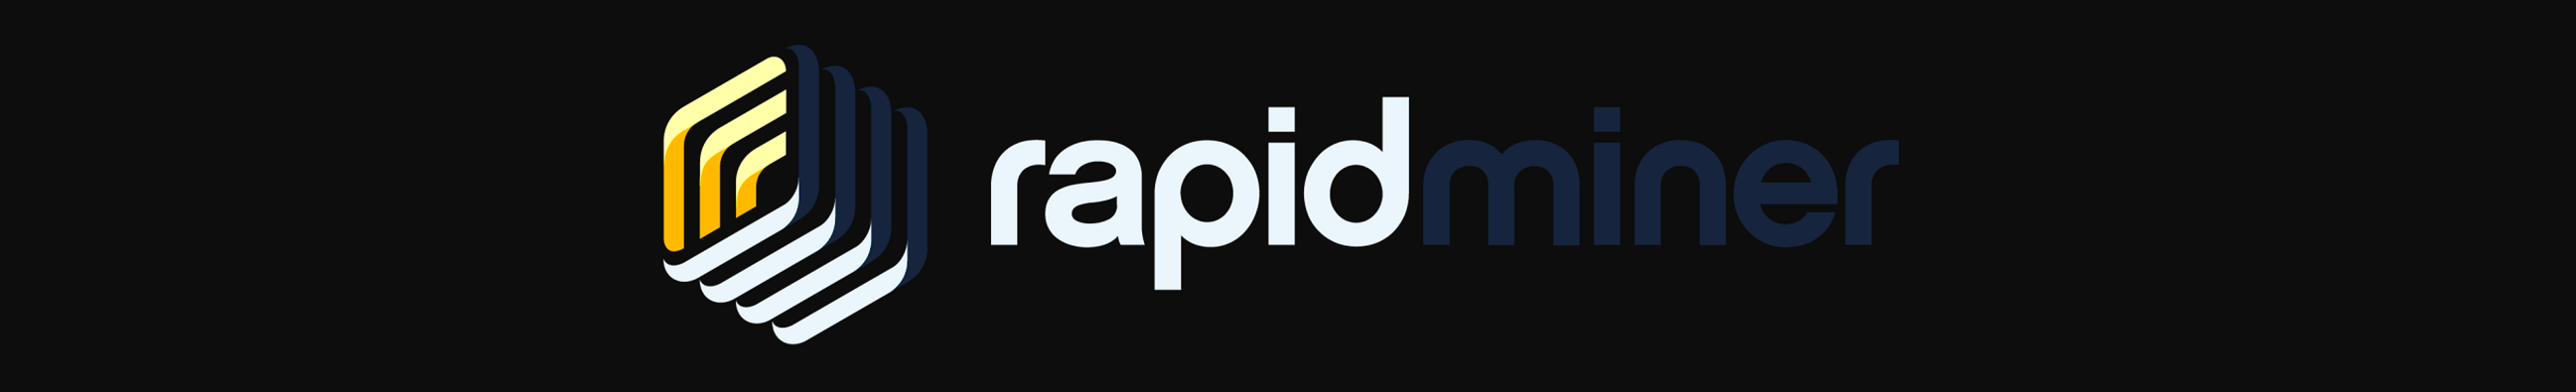 RapidMiner Logo - Top 10 Data Analytics Tools - Edureka